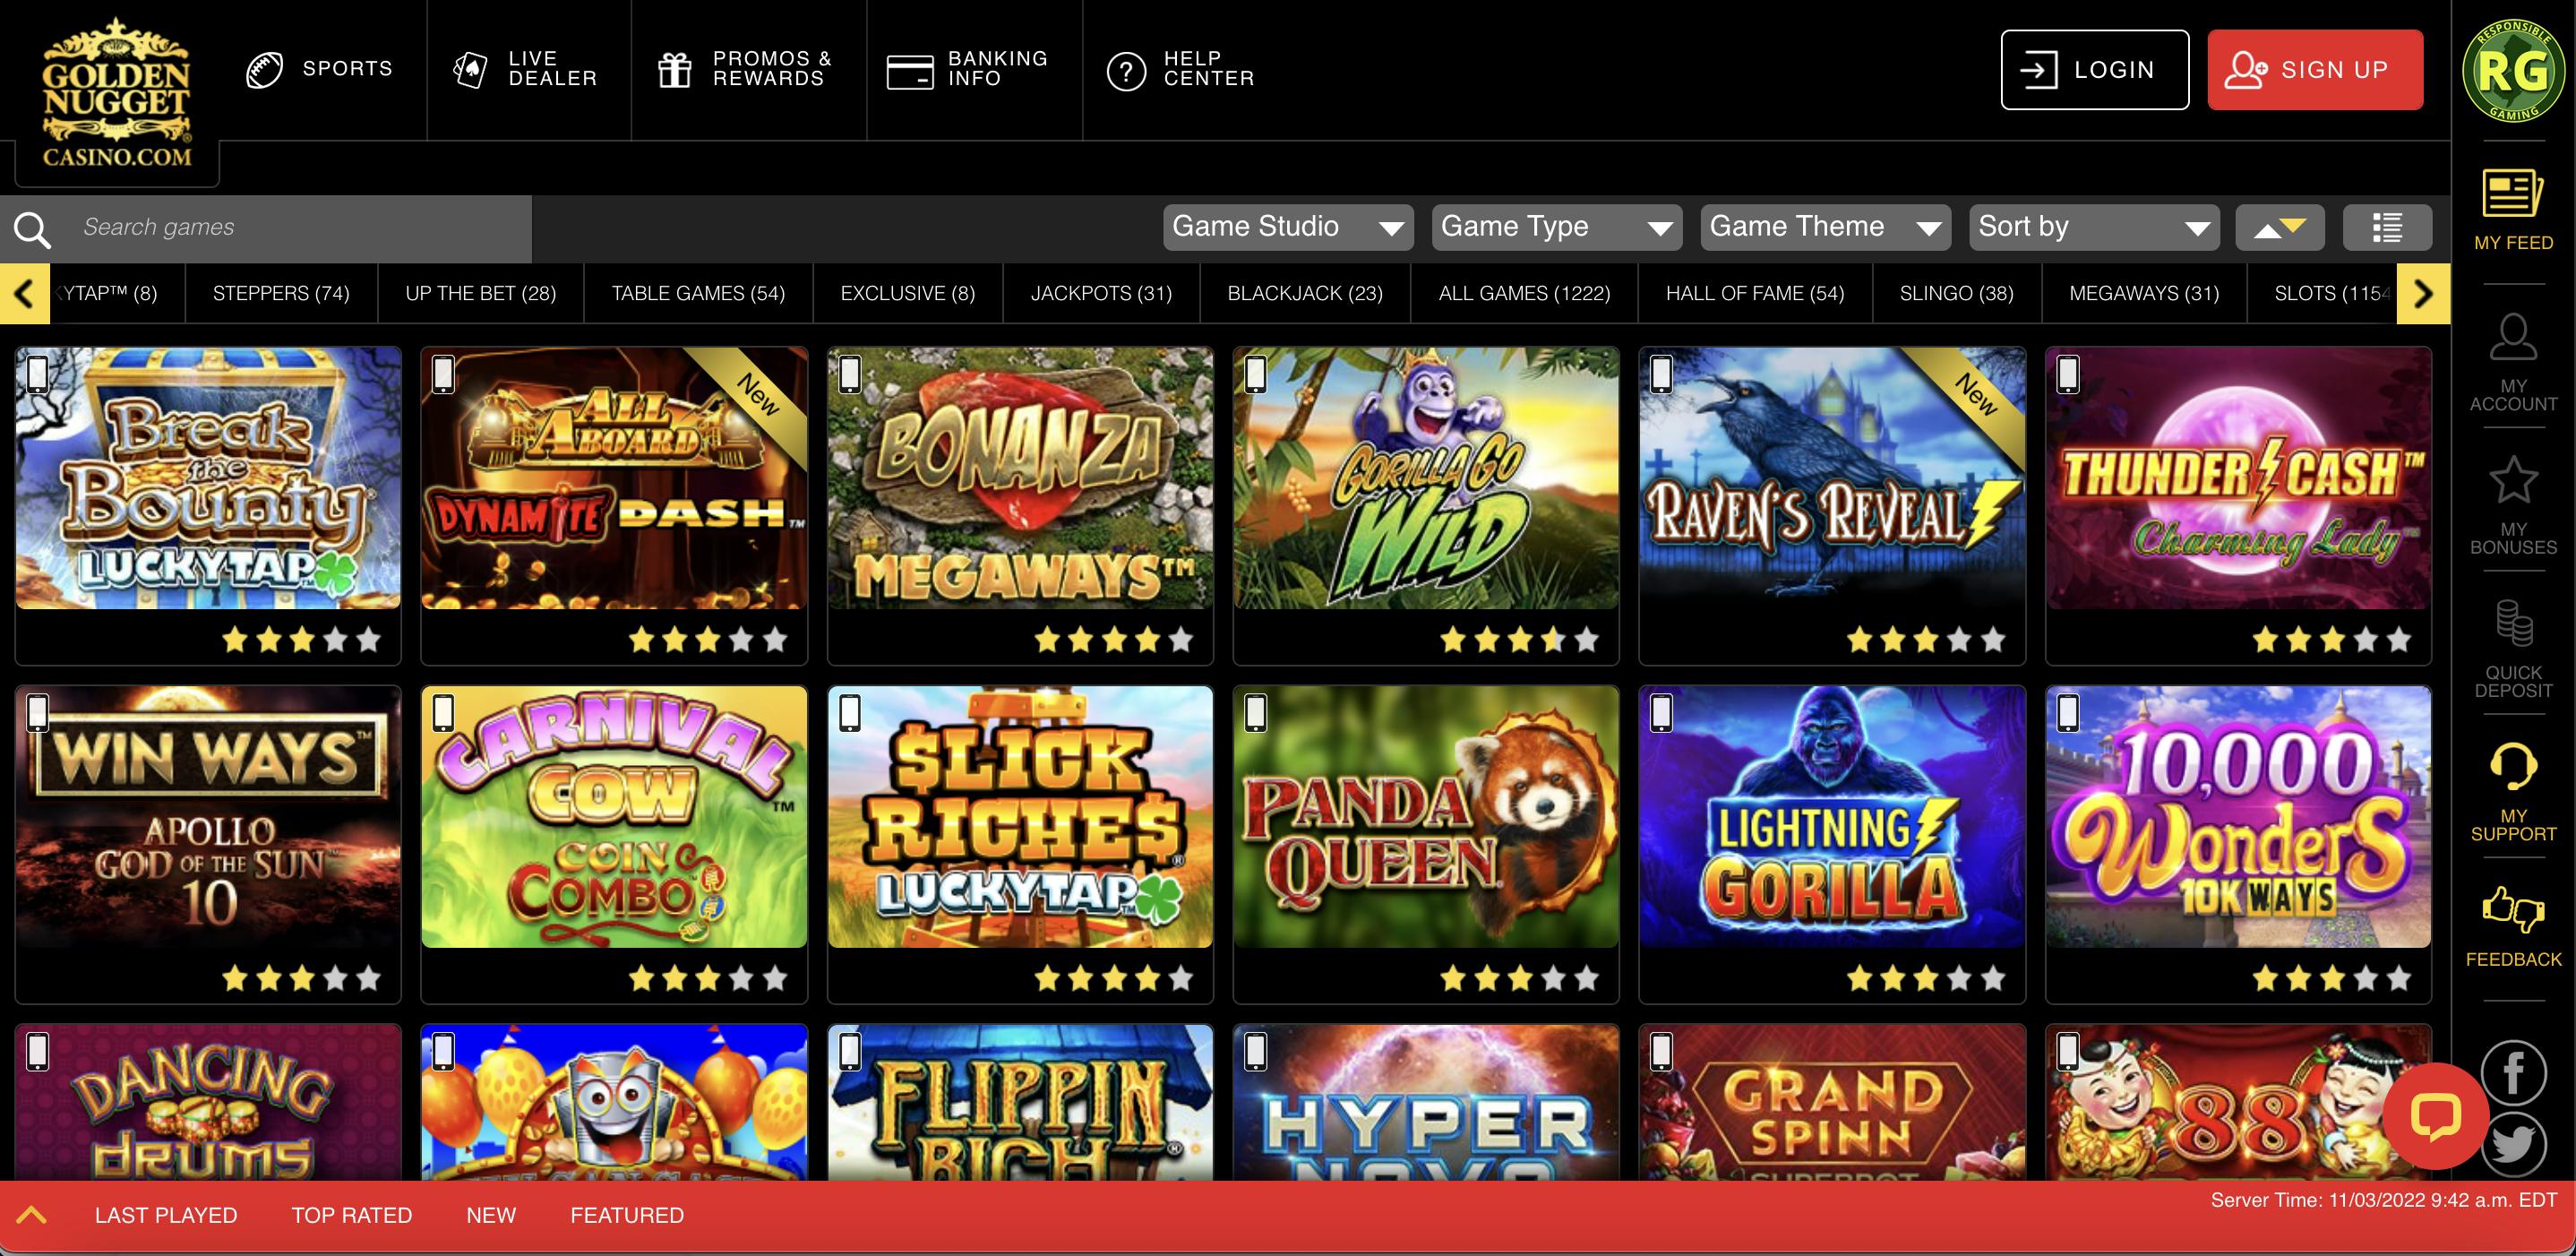 Golden Nugget casino homepage<br>